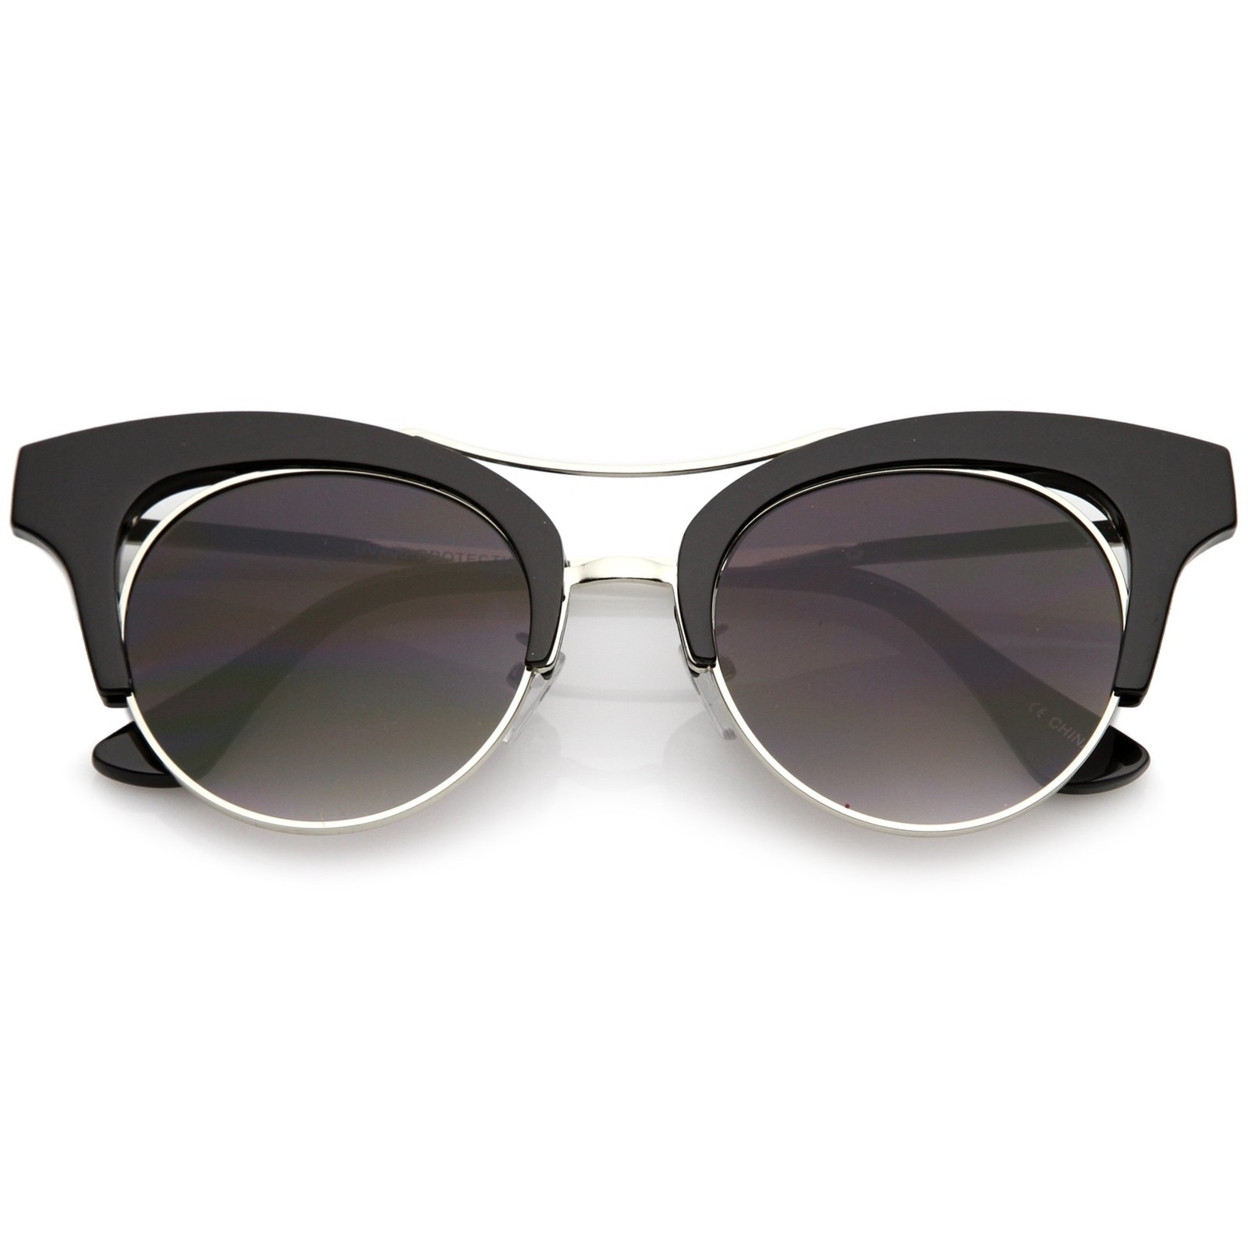 Women's Oversize Cutout Metal Brow Bar Round Flat Lens Cat Eye Sunglasses 51mm - Black-Silver / Lavender